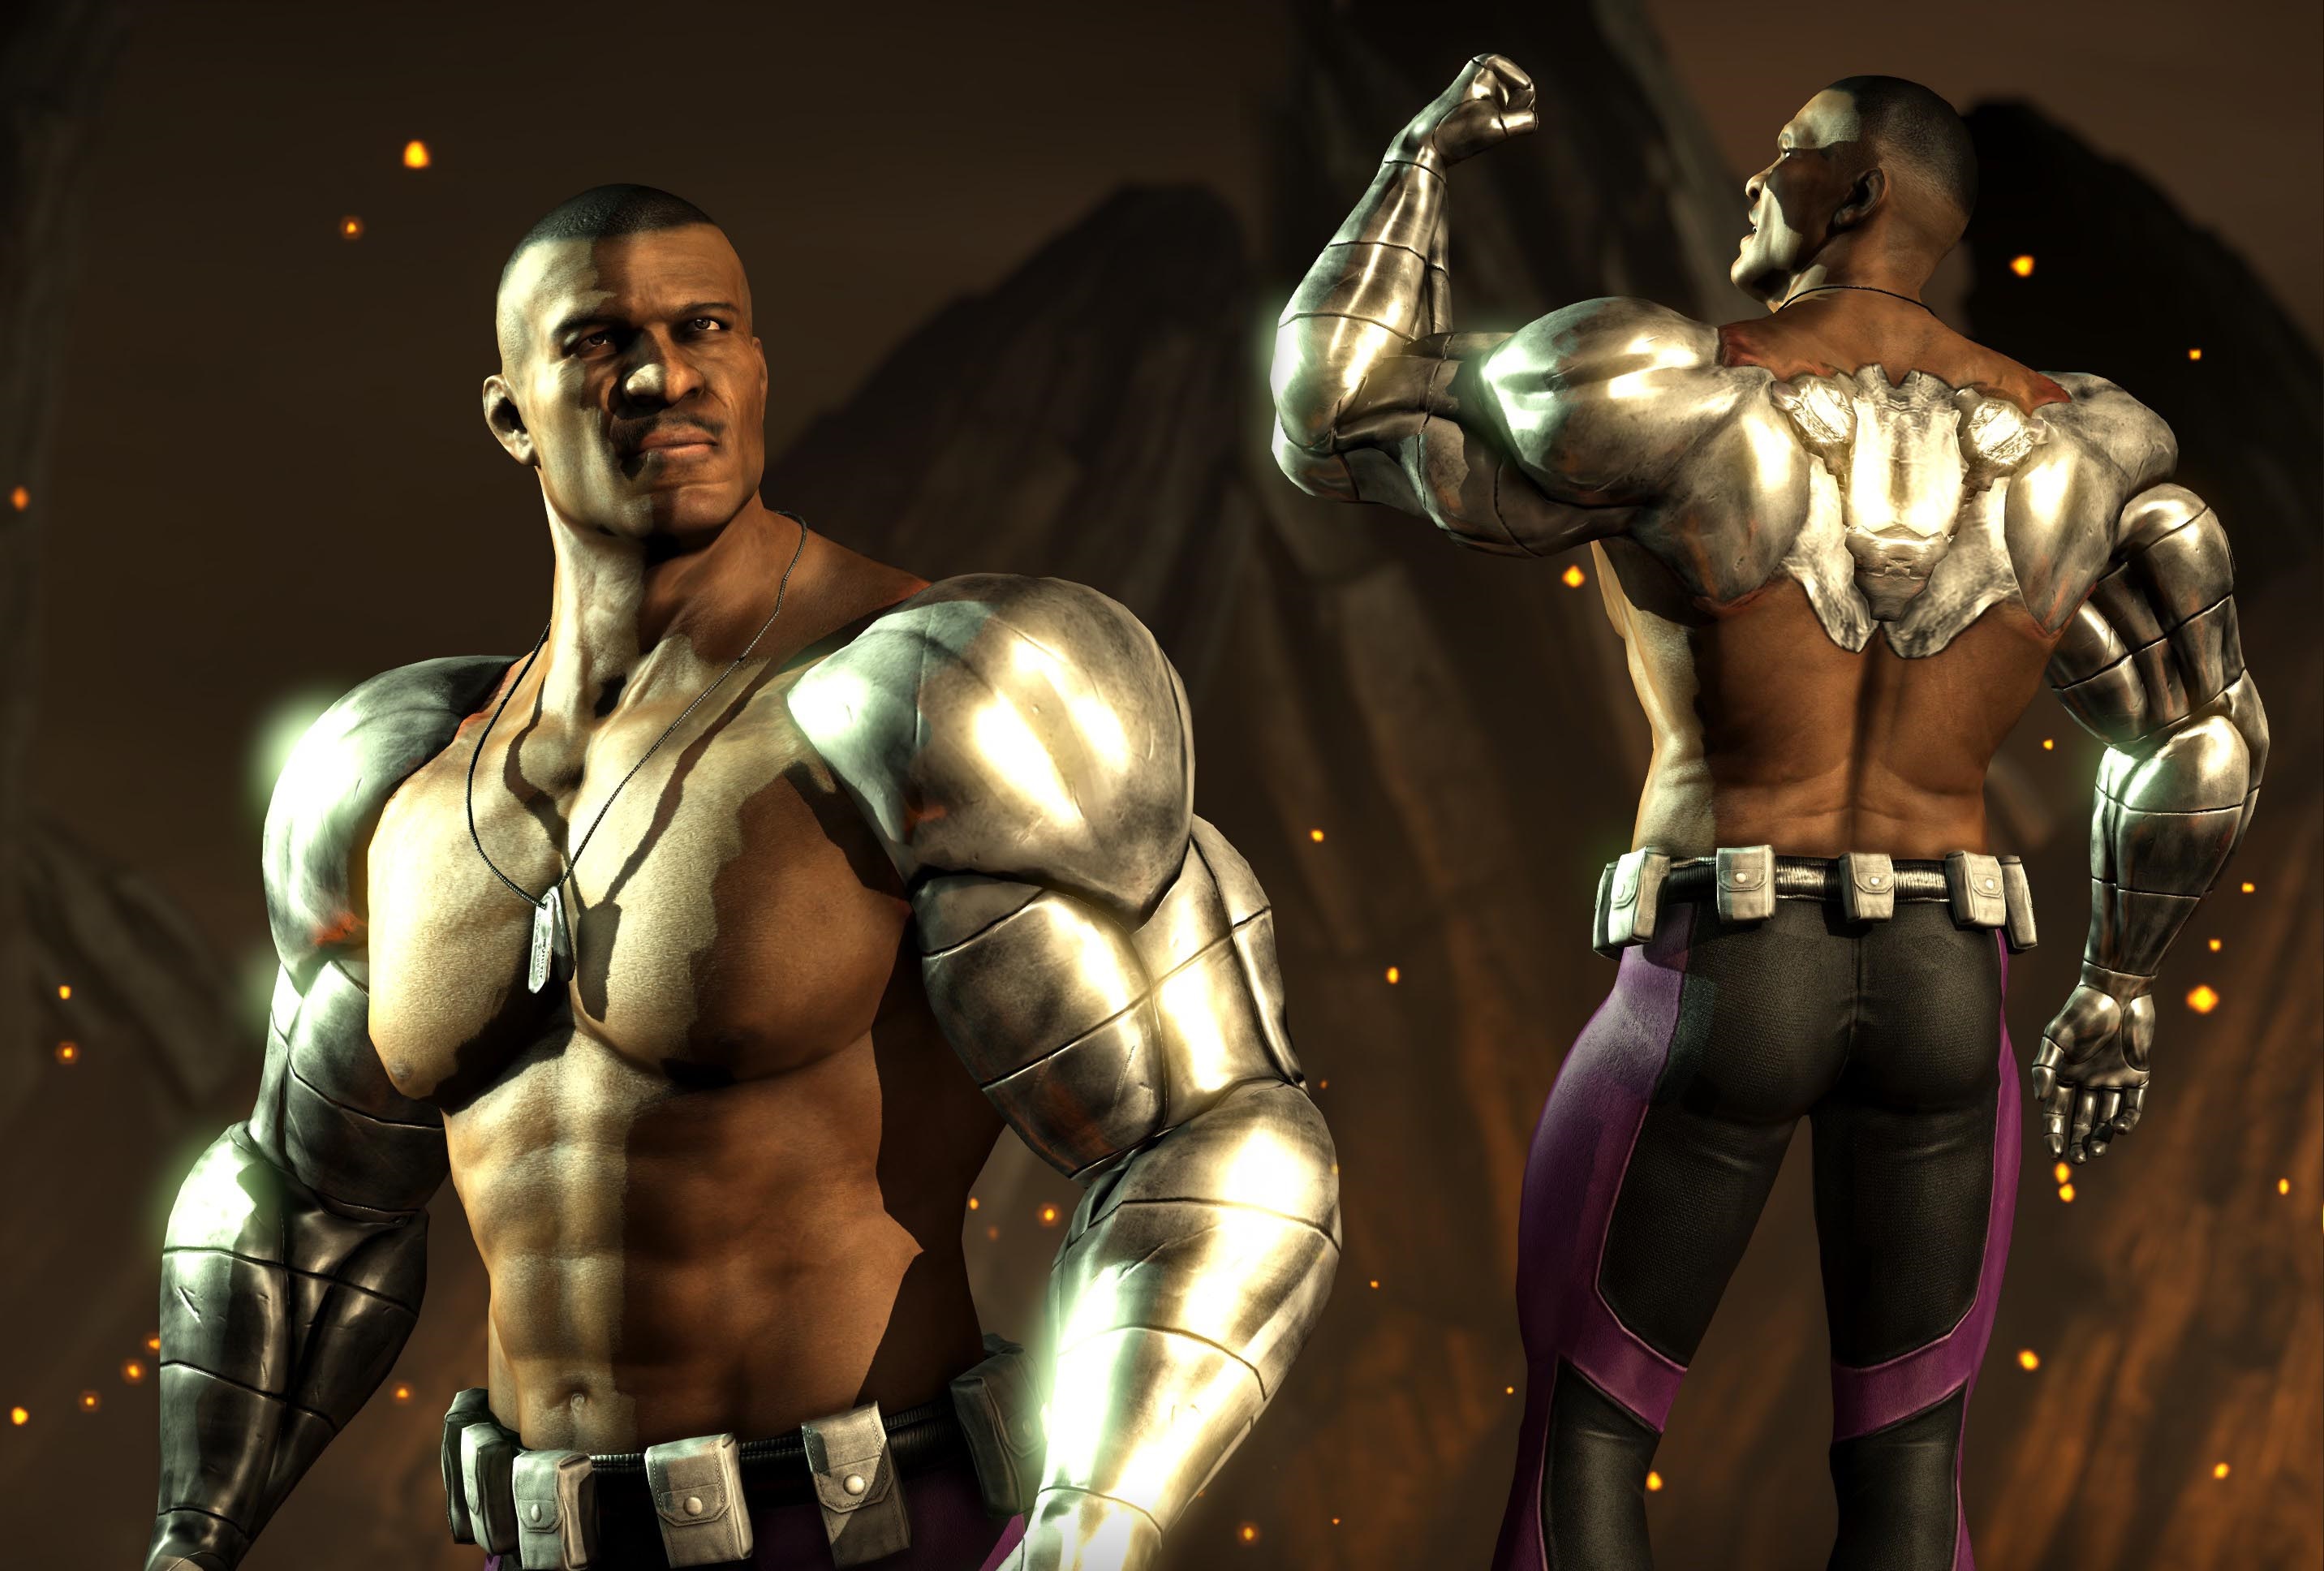 Image 1 - MKX - MK3 Skin Pack by King Kolossos mod for Mortal Kombat X.